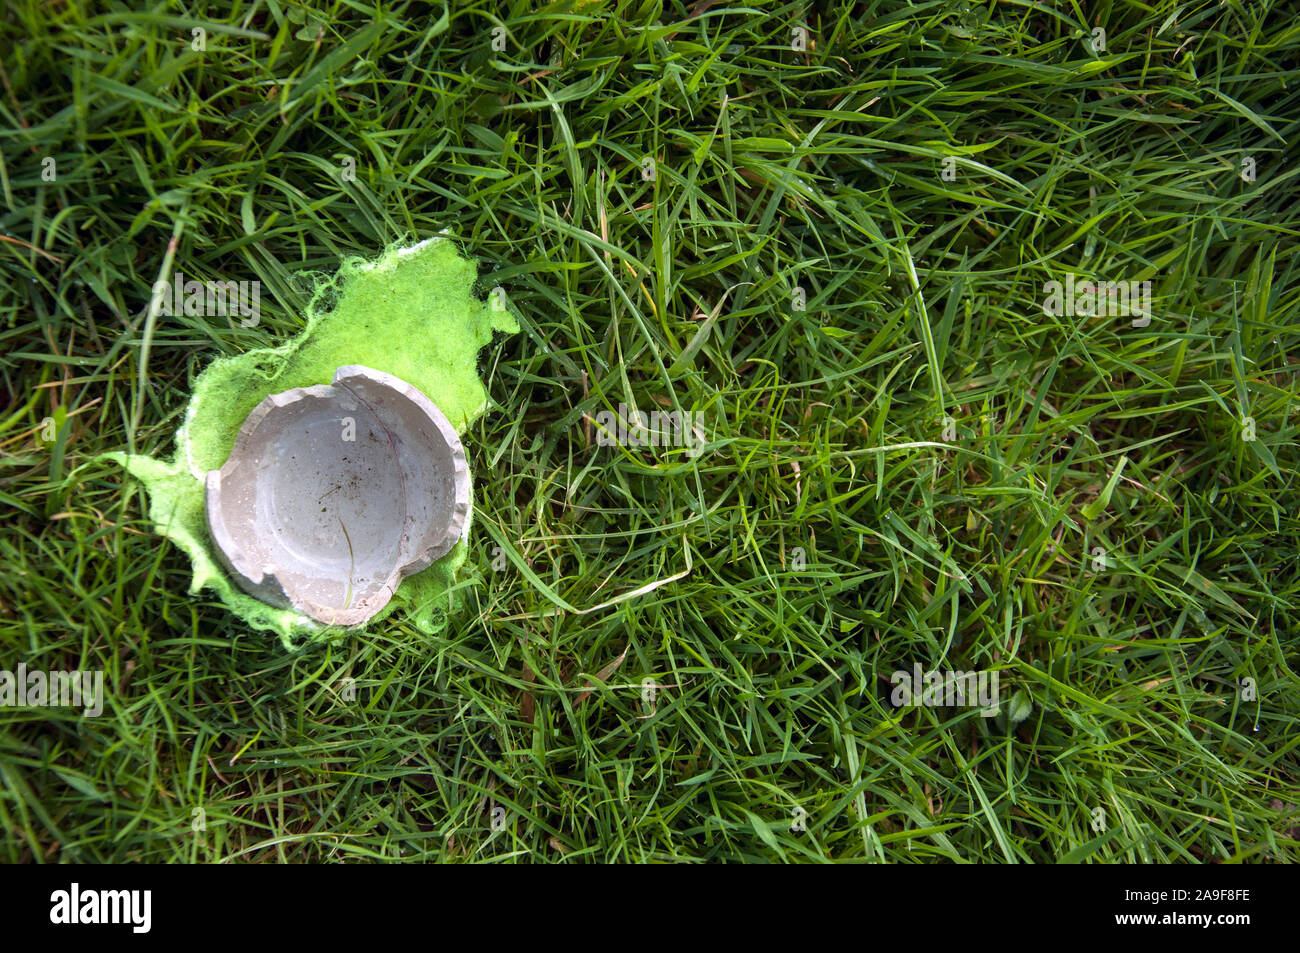 A broken tennis ball on the grass. Stock Photo